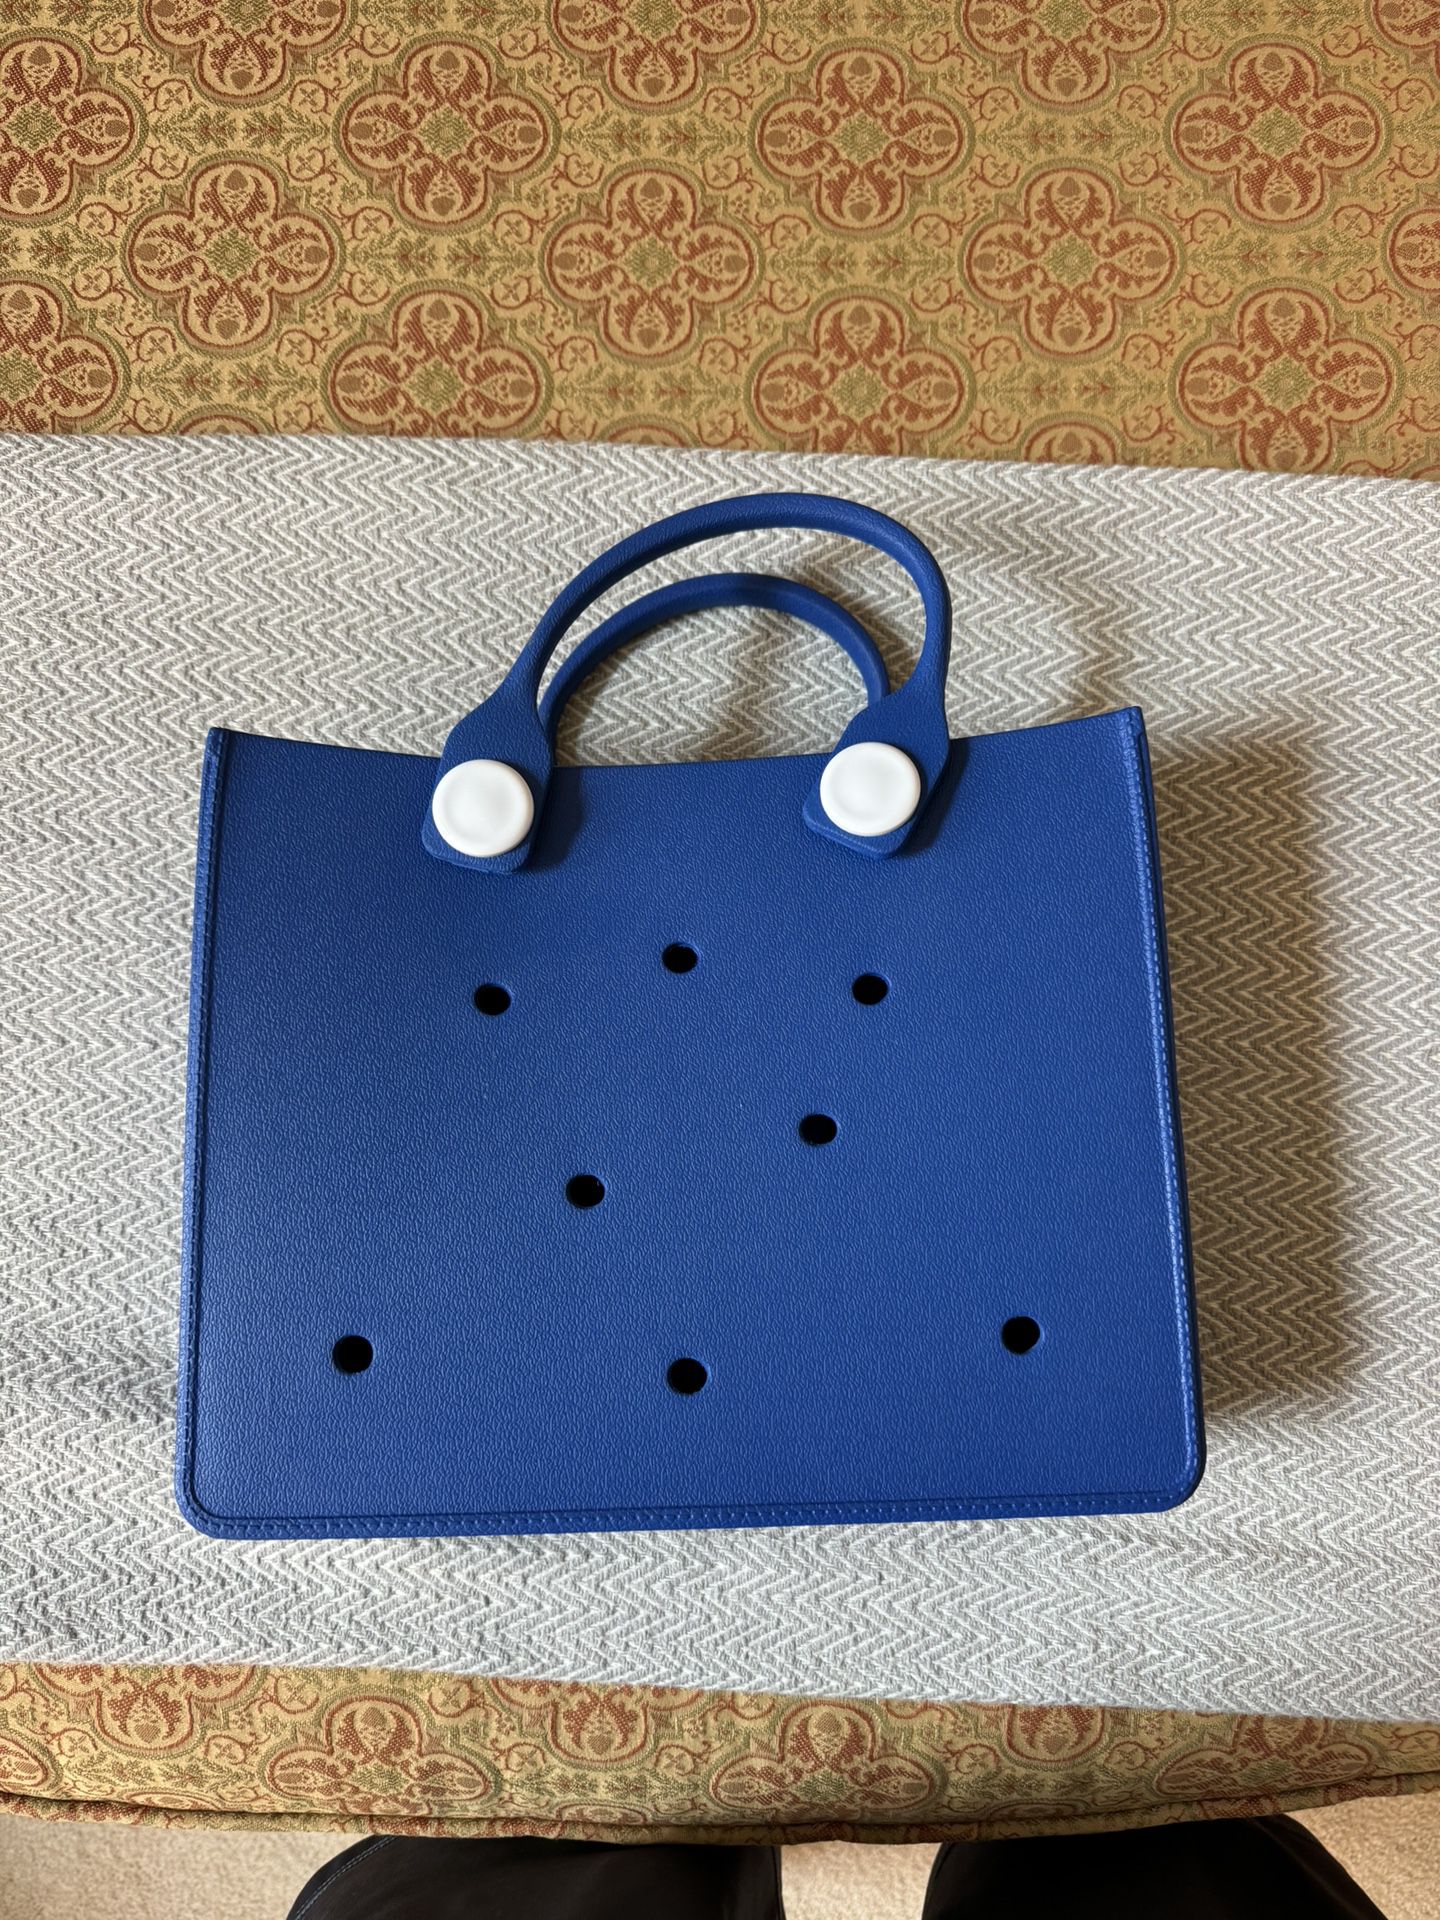 452-PRTT New Blue EVA Waterproof Beach Bag, Short Handles, Comfortable To Carry